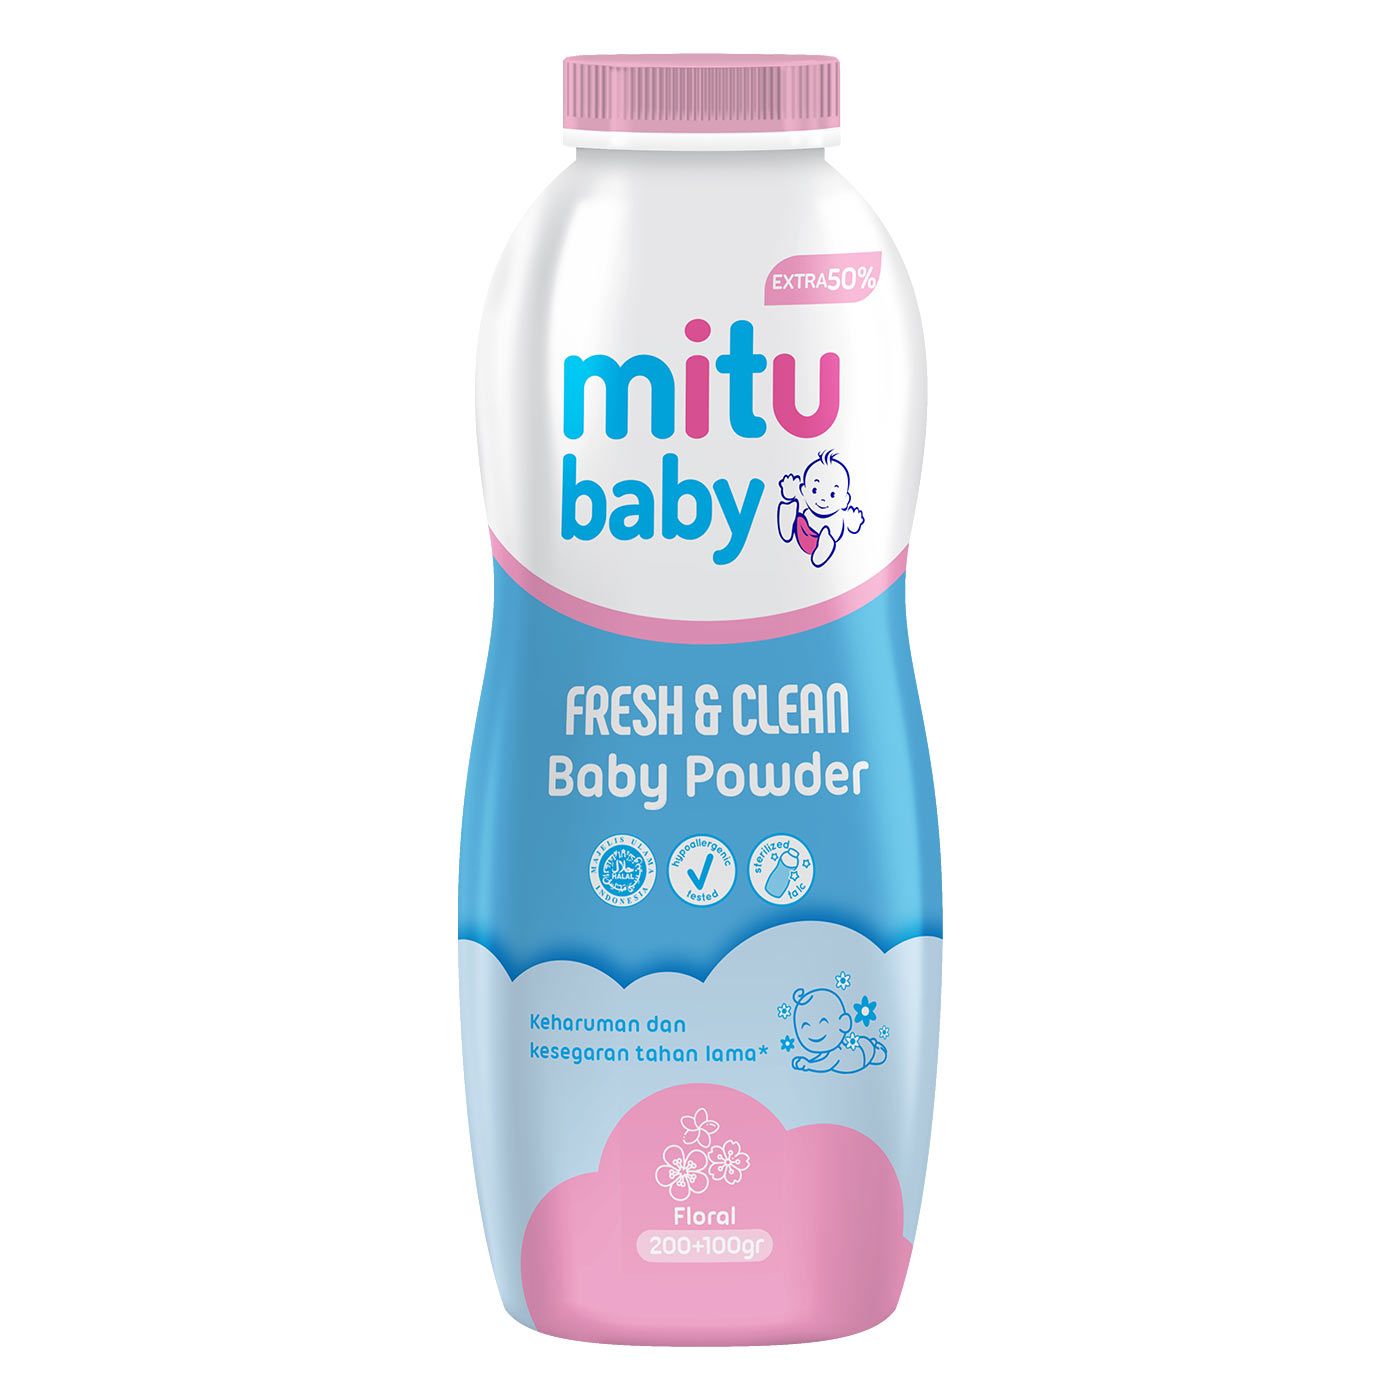 Mitu Baby Fresh & Clean Powder 200g Extrafill 50% Pink - 1